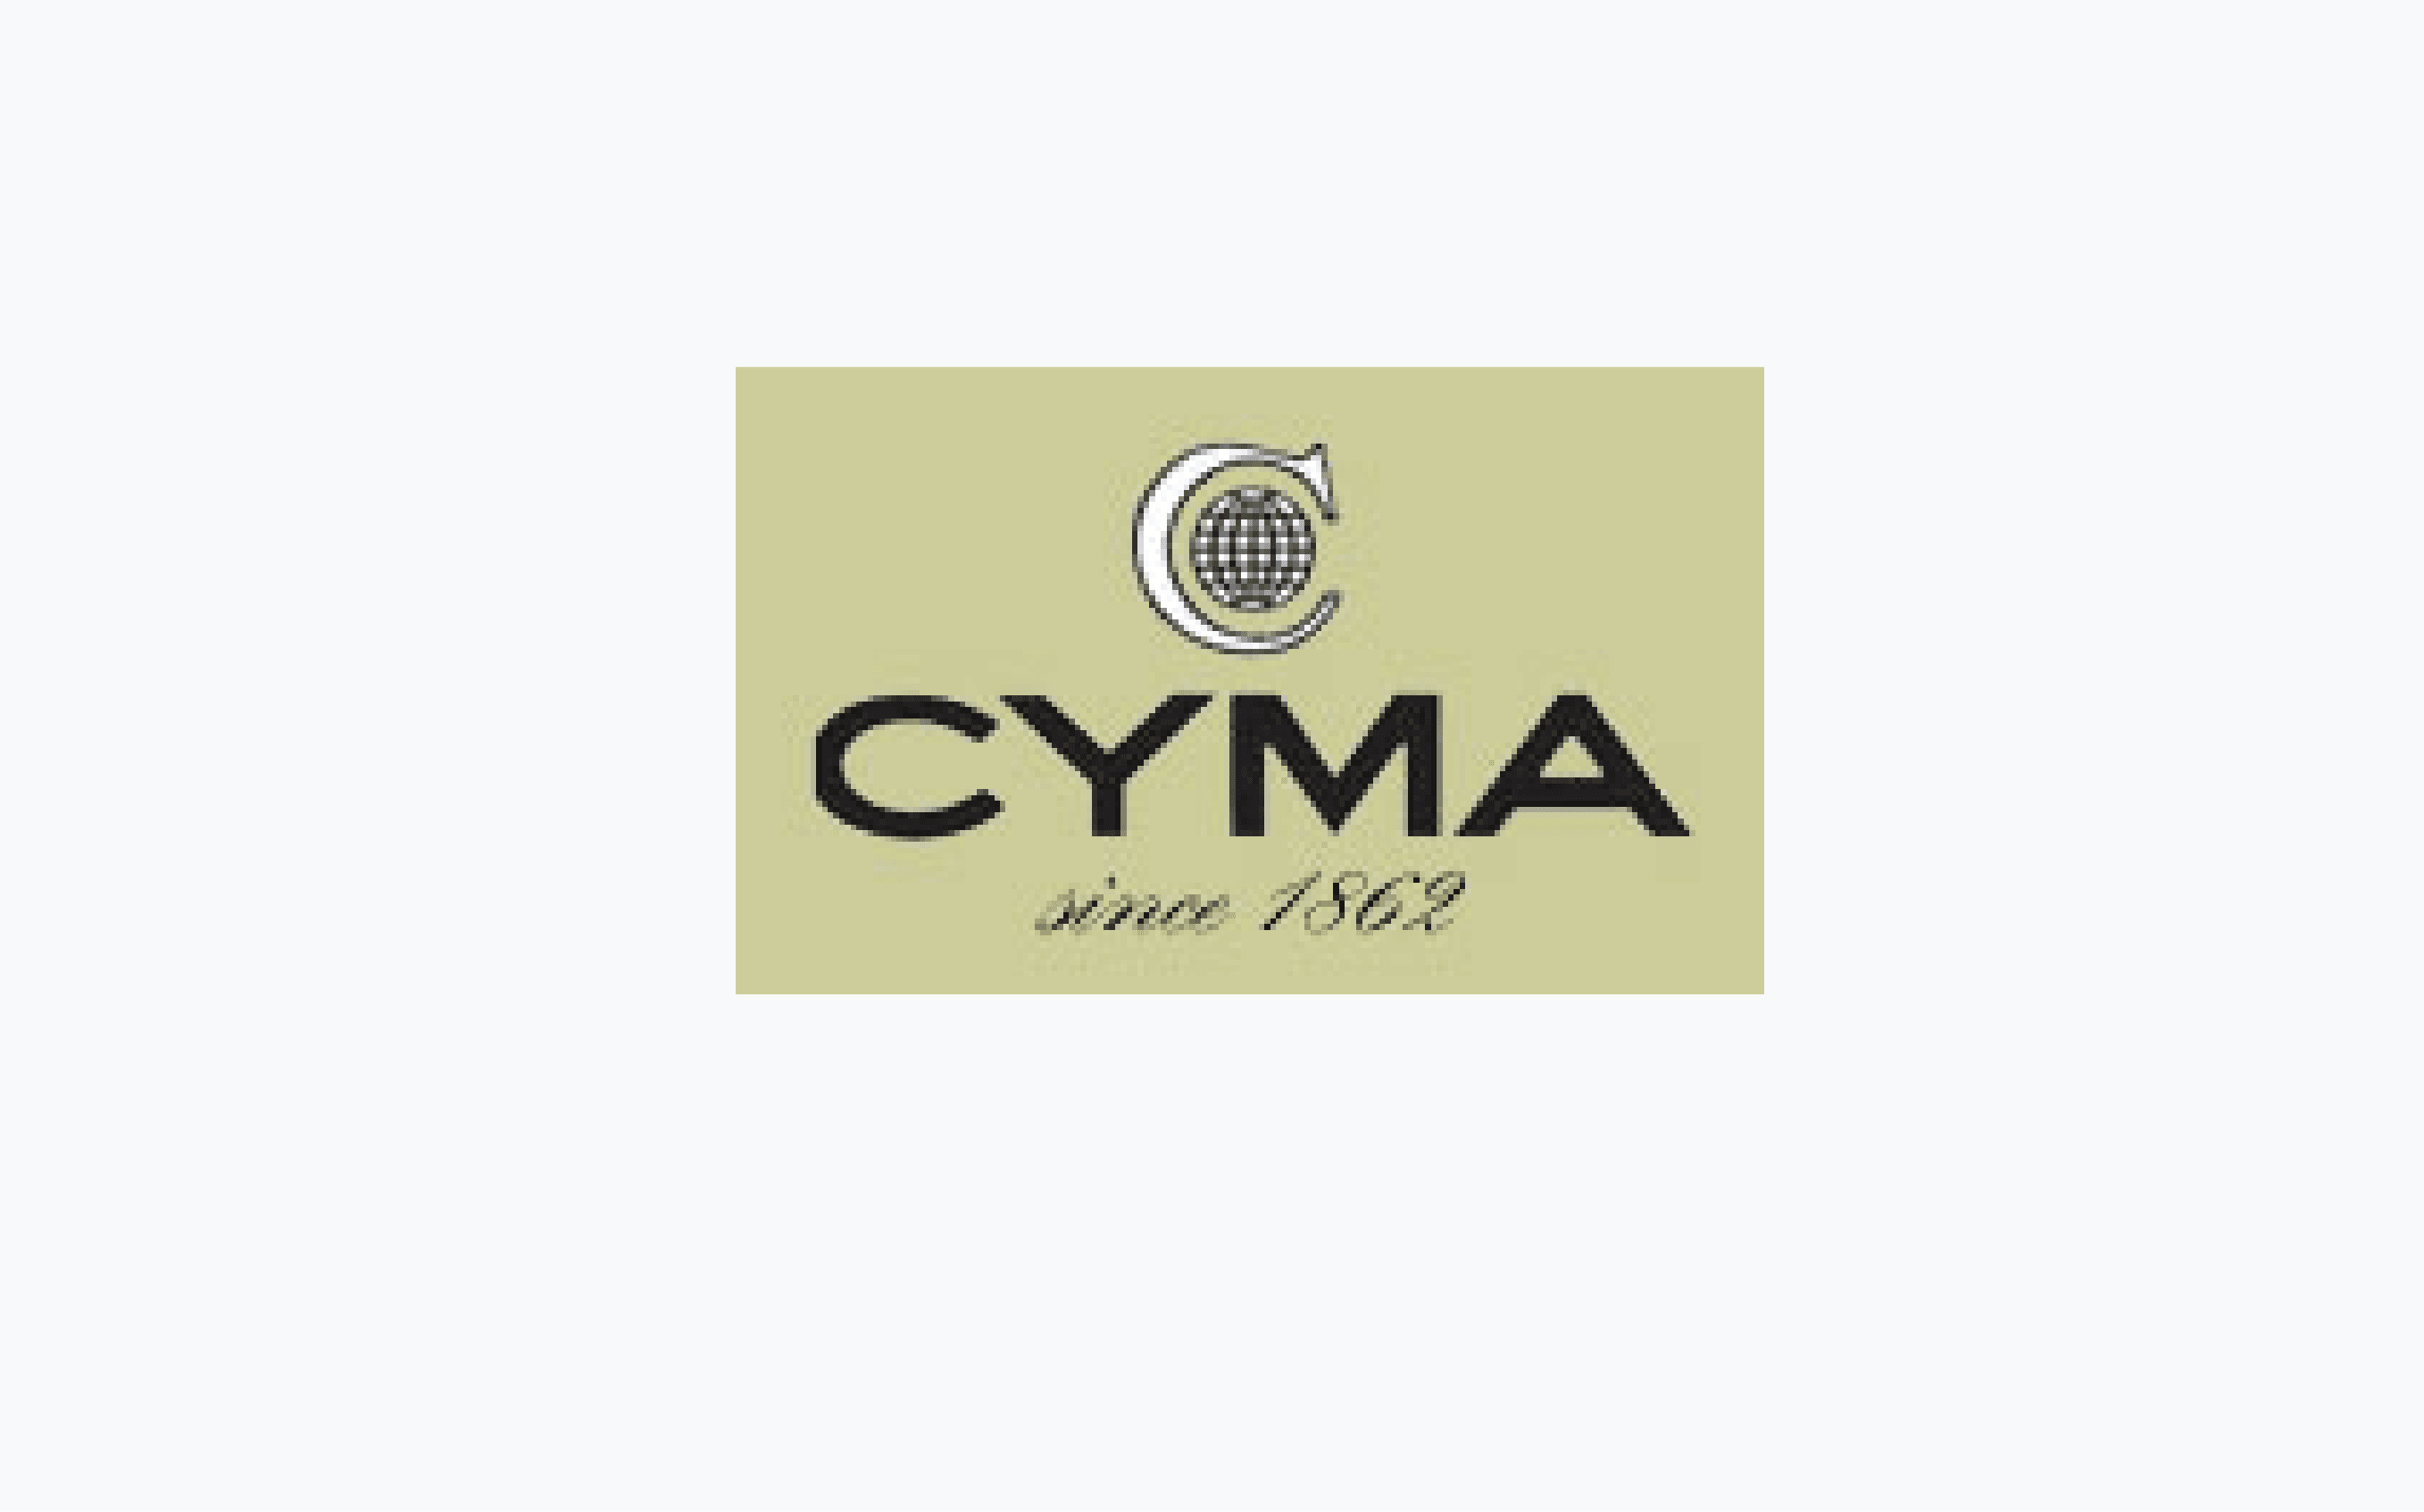 Cyma category